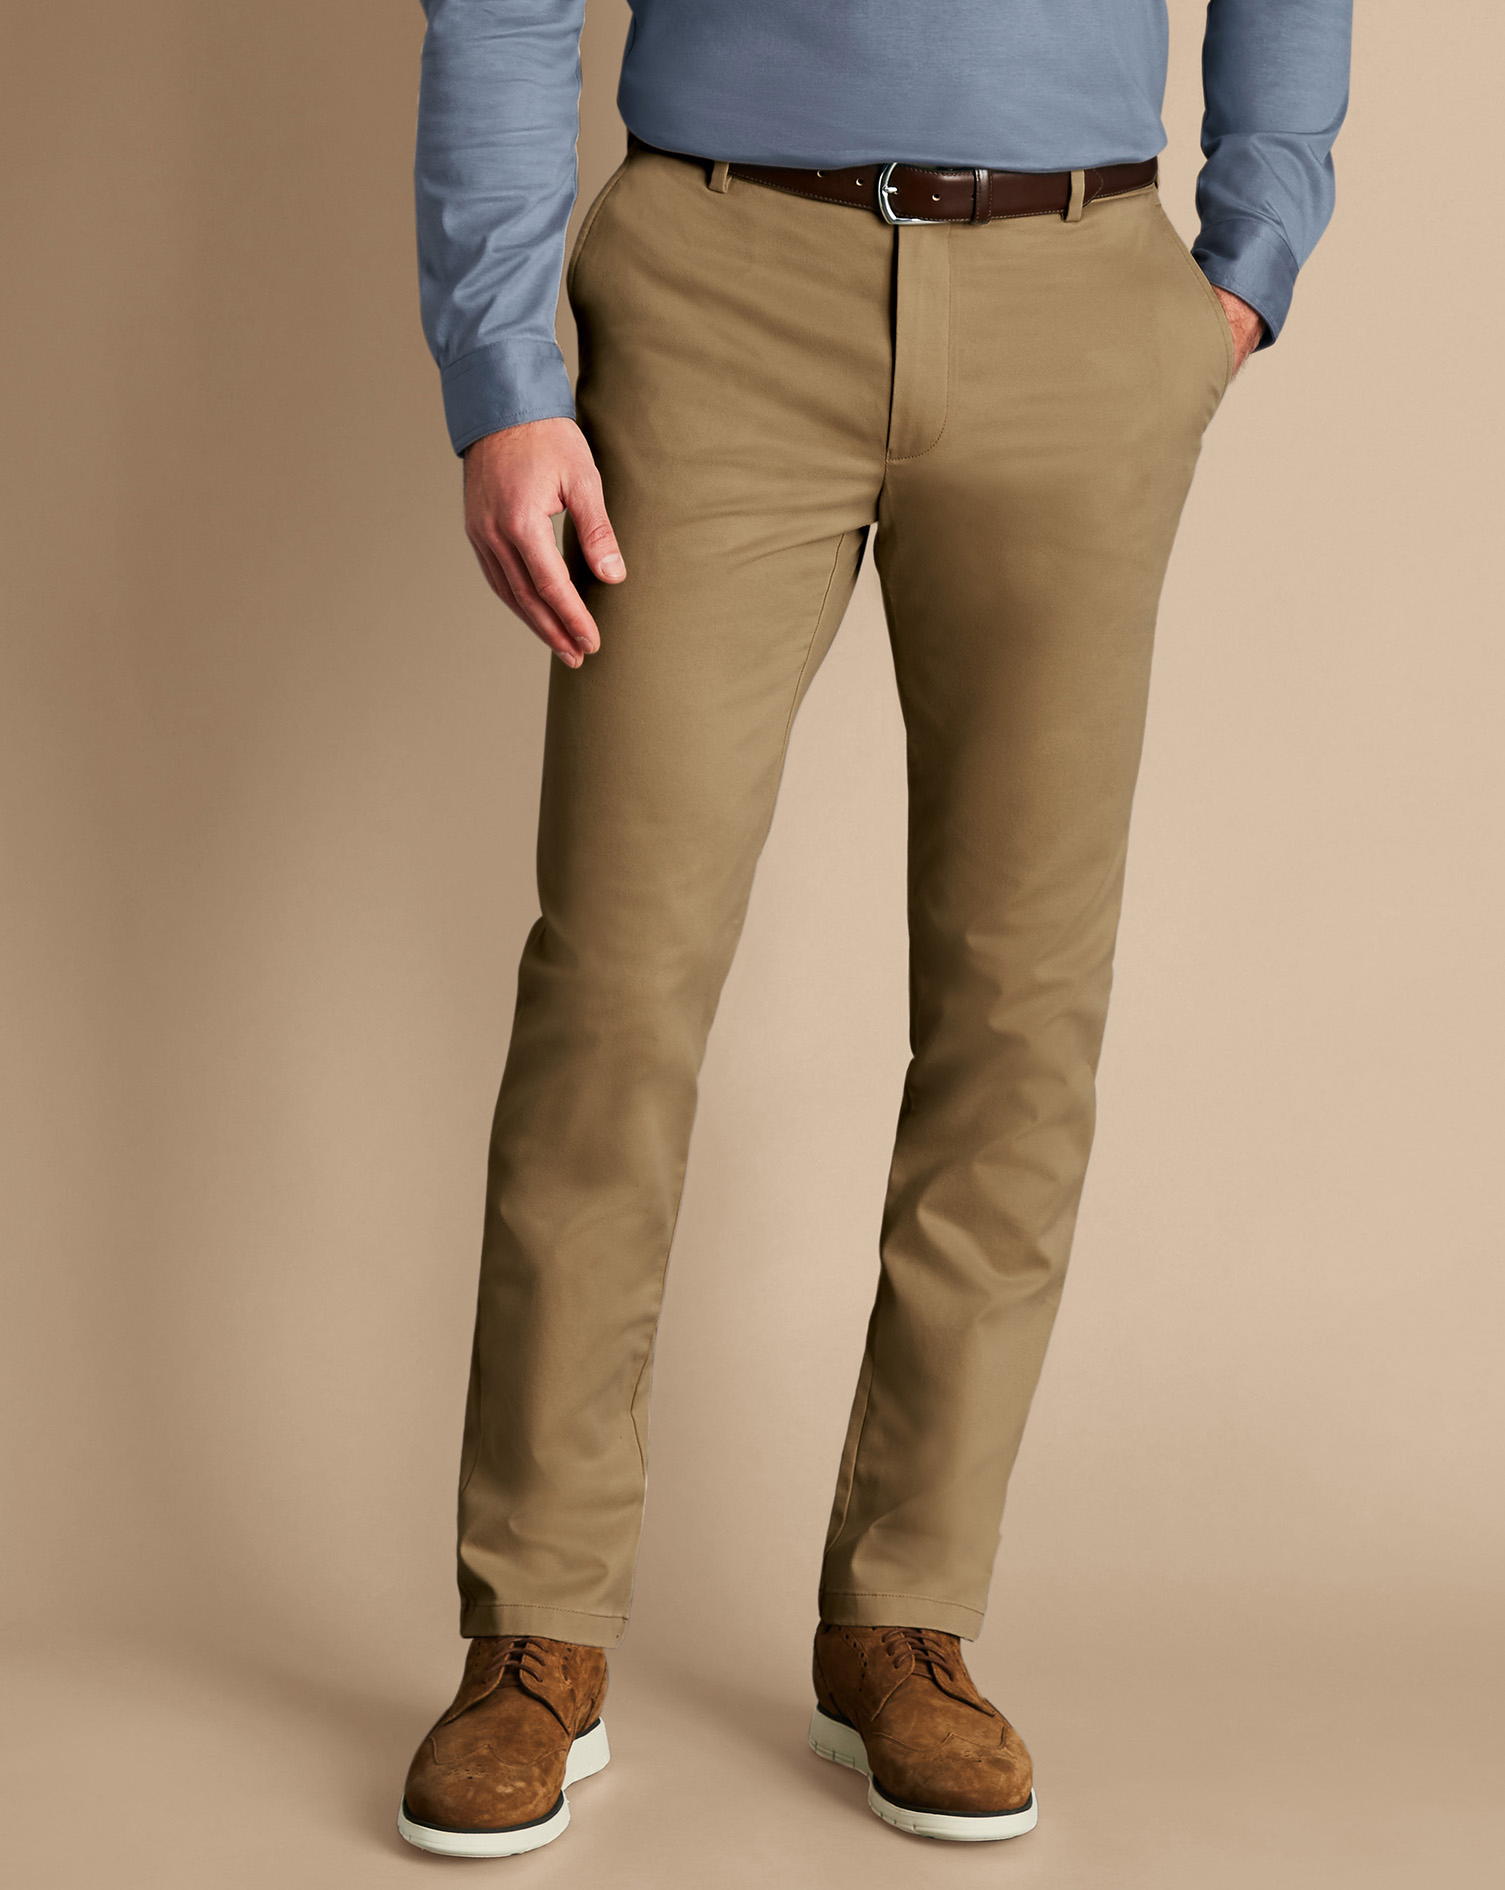 Ultimate Non-Iron Cotton Chino Pants - Tan Size W38 L34
